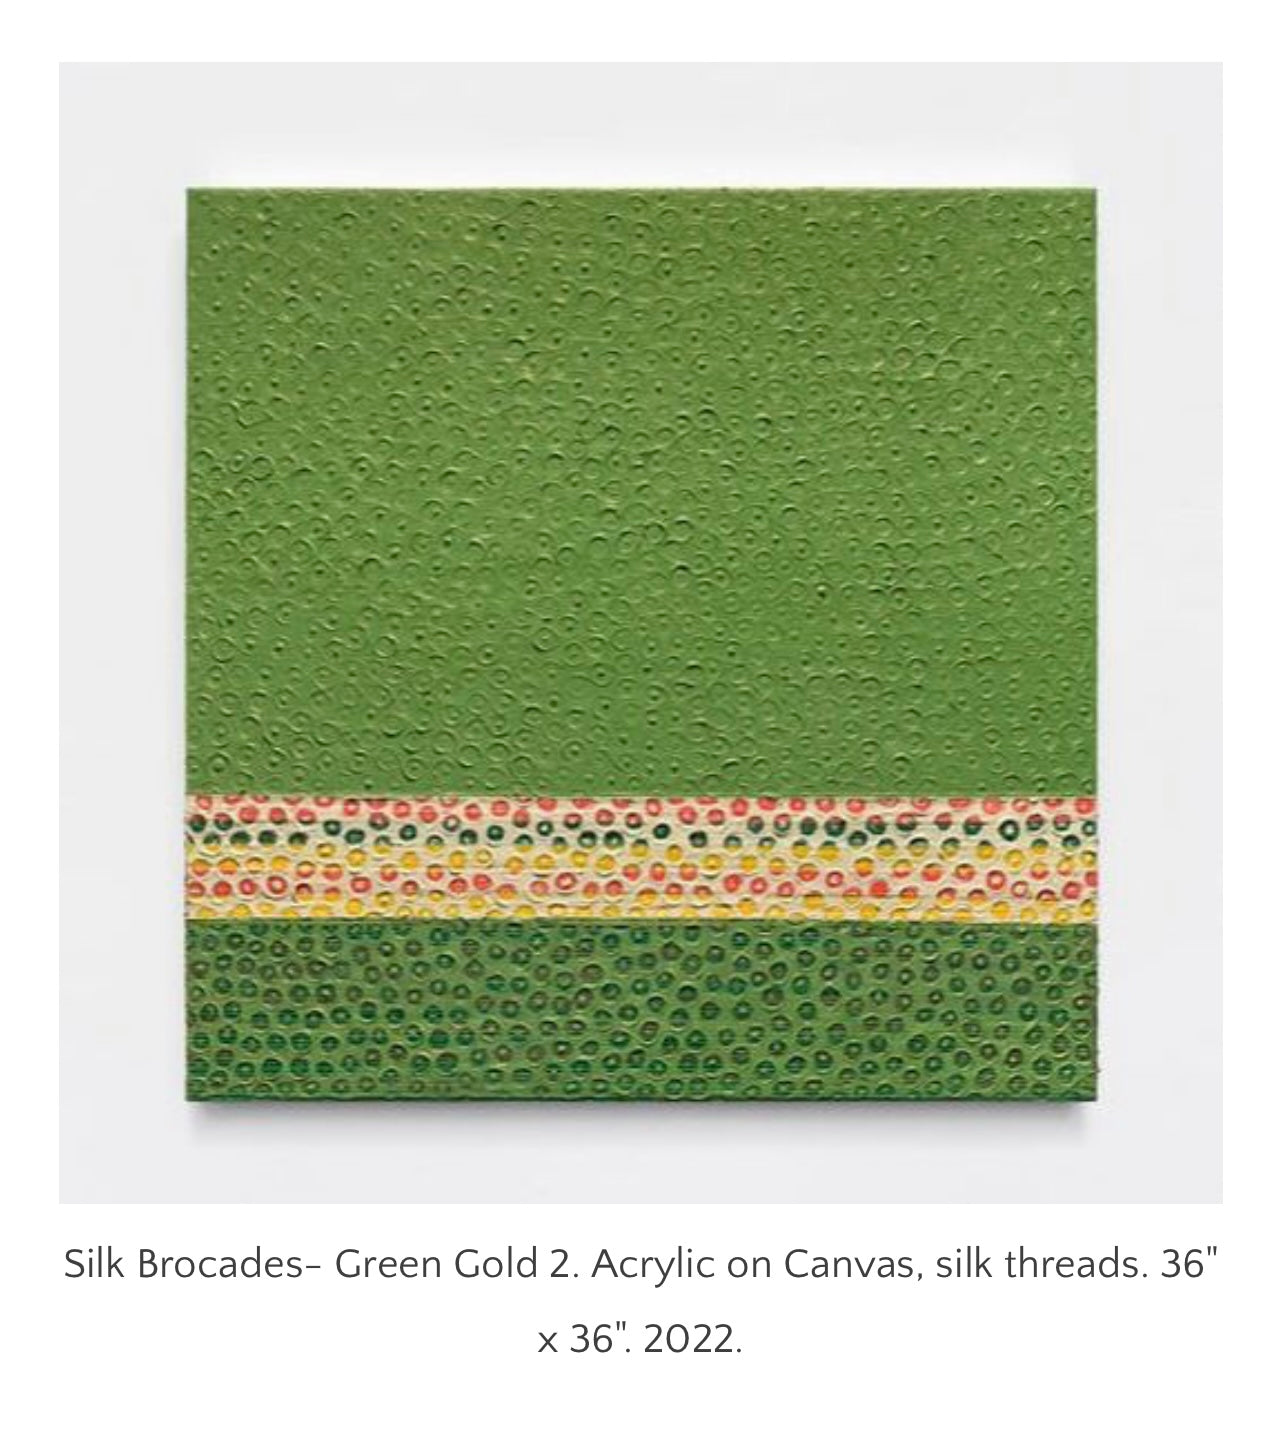 Silk Brocades - Green Gold 2